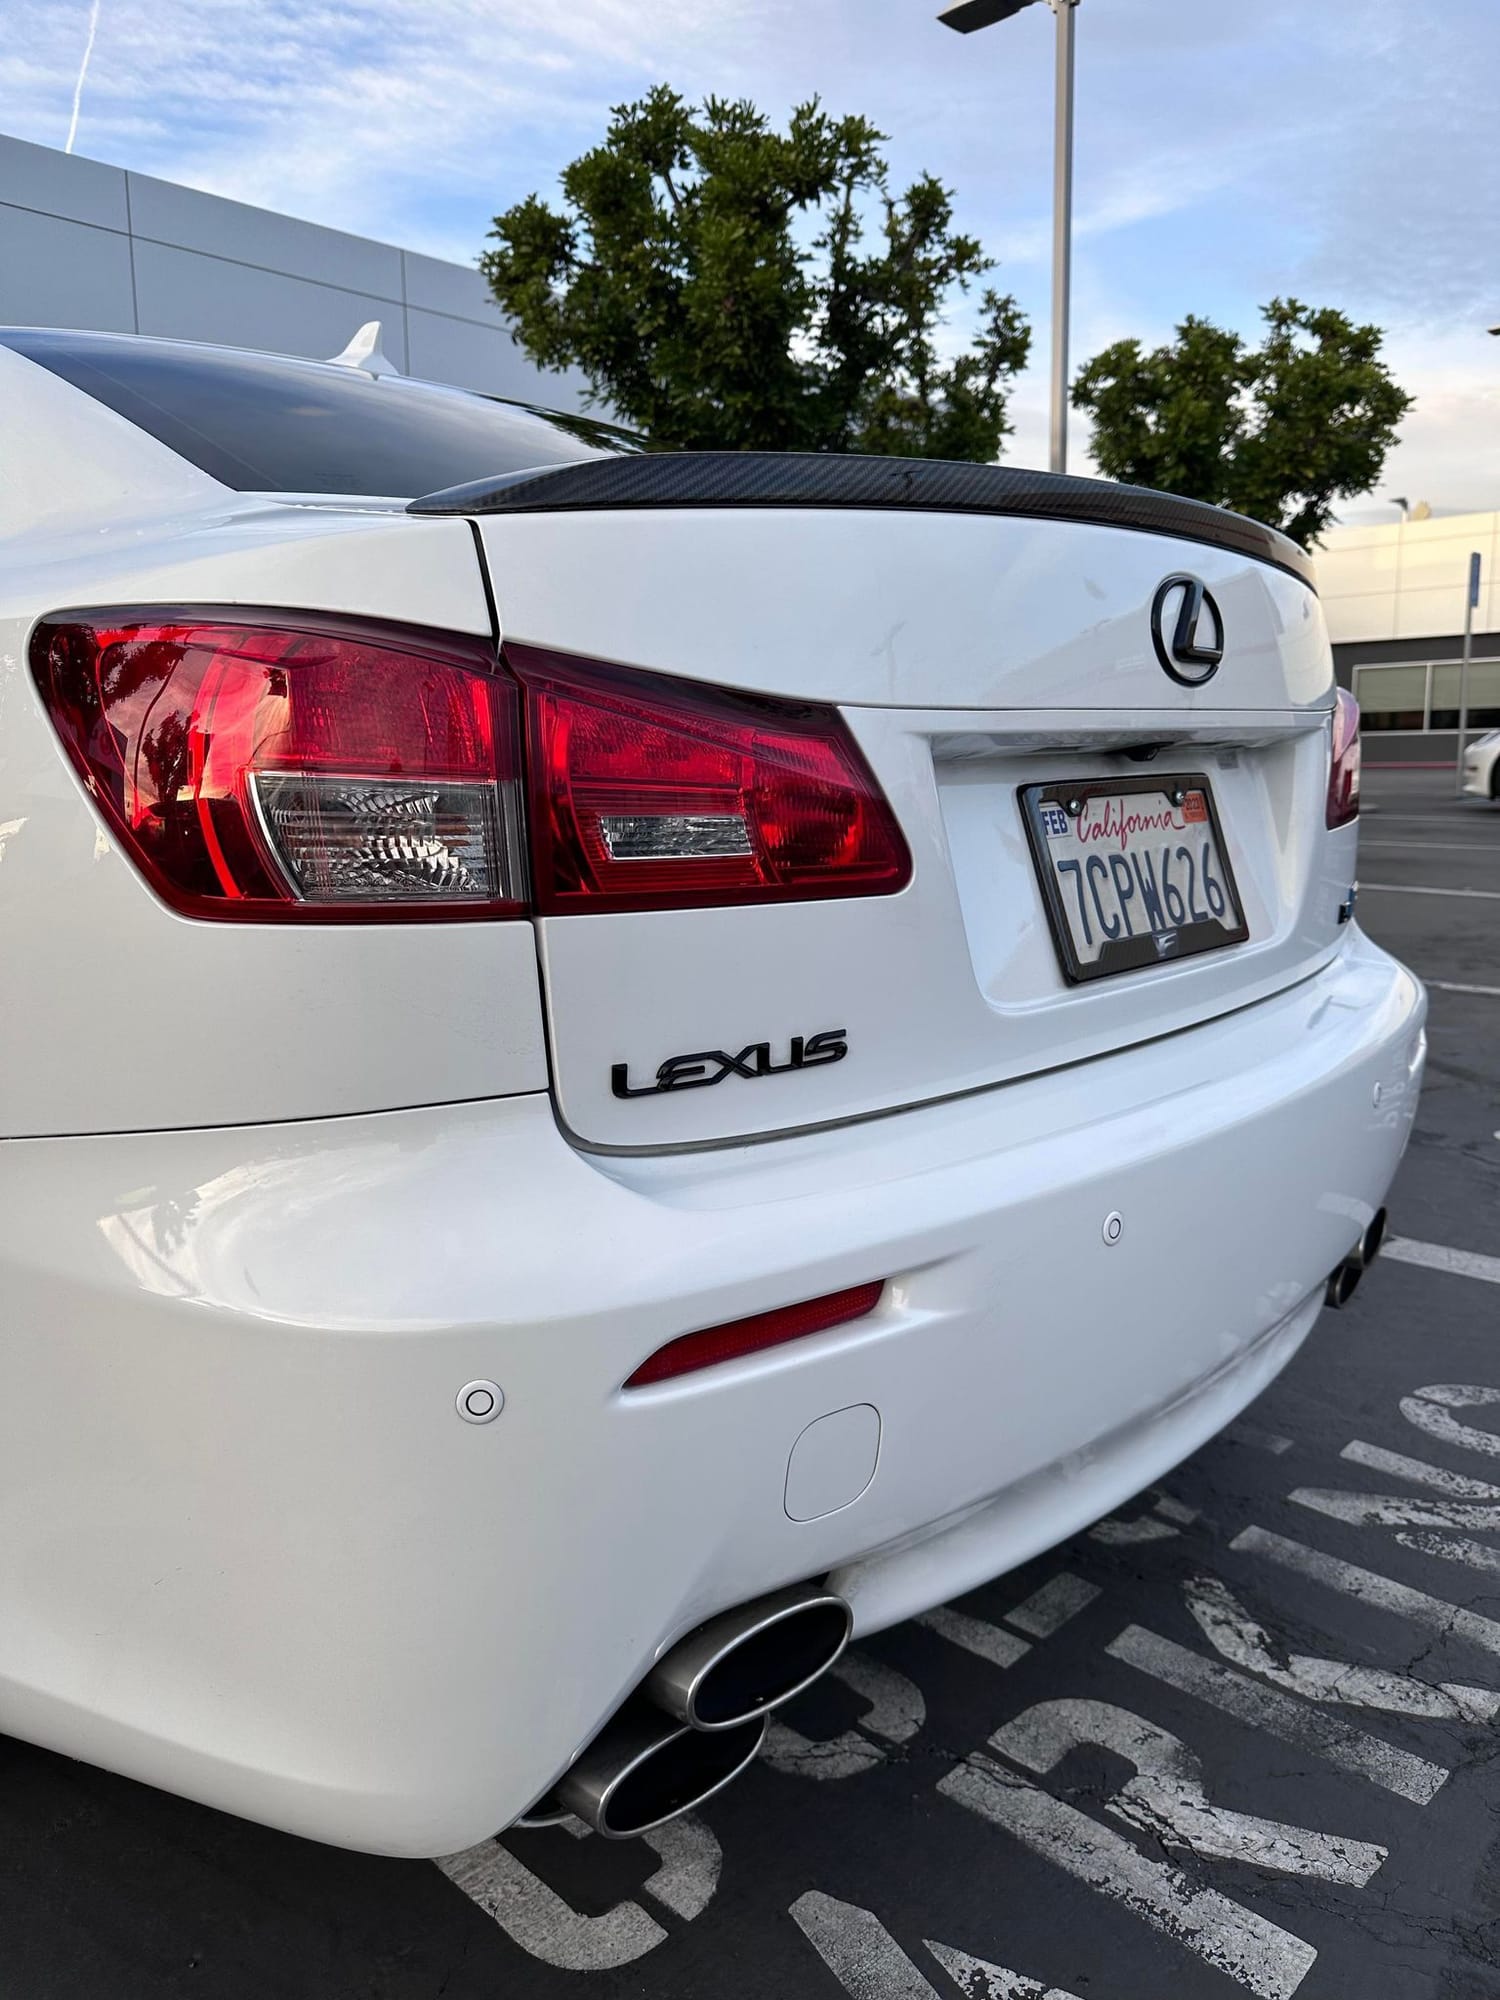 2014 Lexus IS F - 2014 Lexus IS-F For Sale - Used - VIN JTHBP5C22E5011458 - 72,100 Miles - 8 cyl - 2WD - Automatic - Sedan - White - San Gabriel, CA 91776, United States